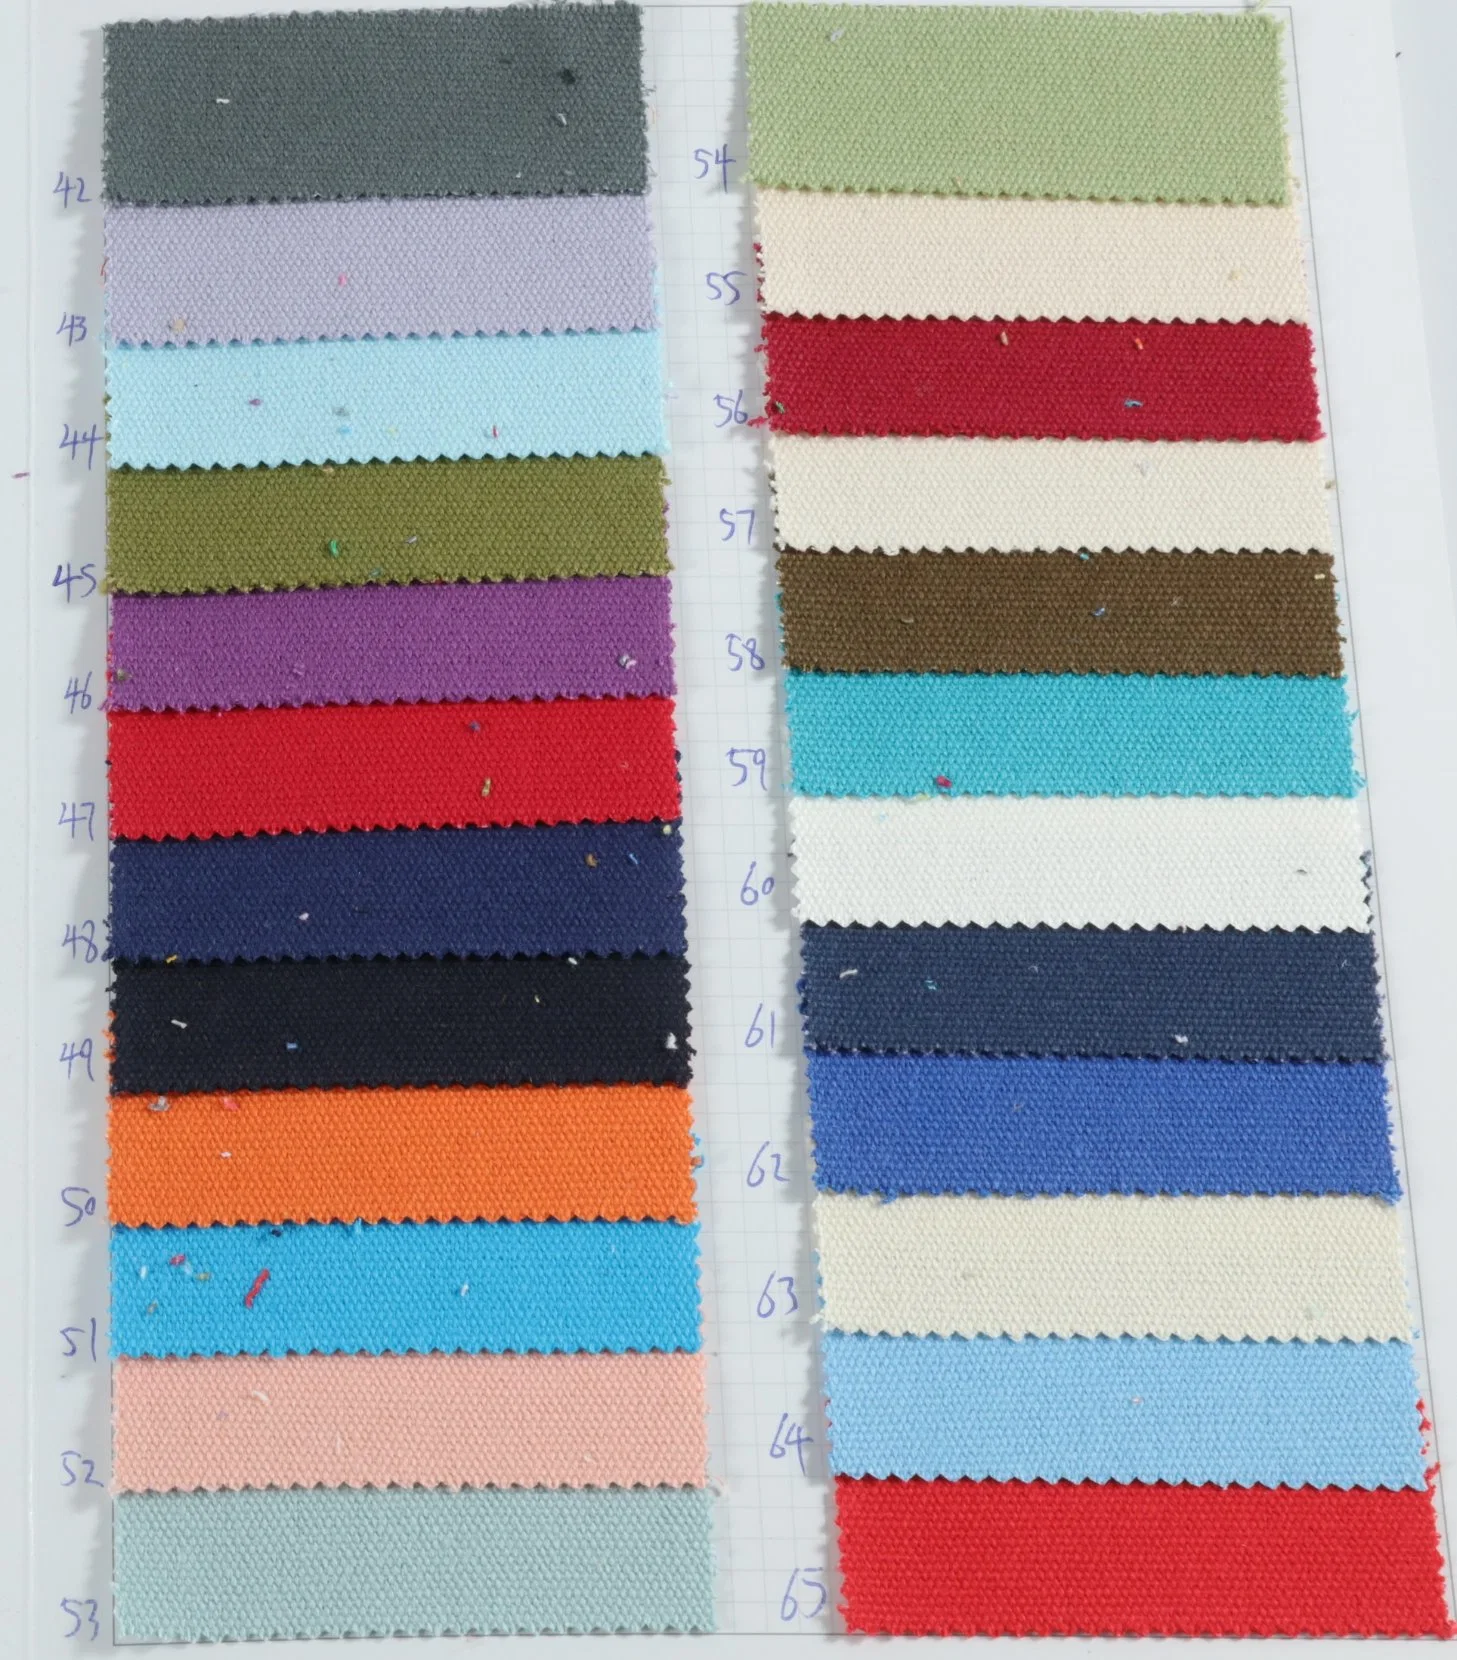 Lienzo de algodón textil Stock diseño tejido teñido de telas para vestuario